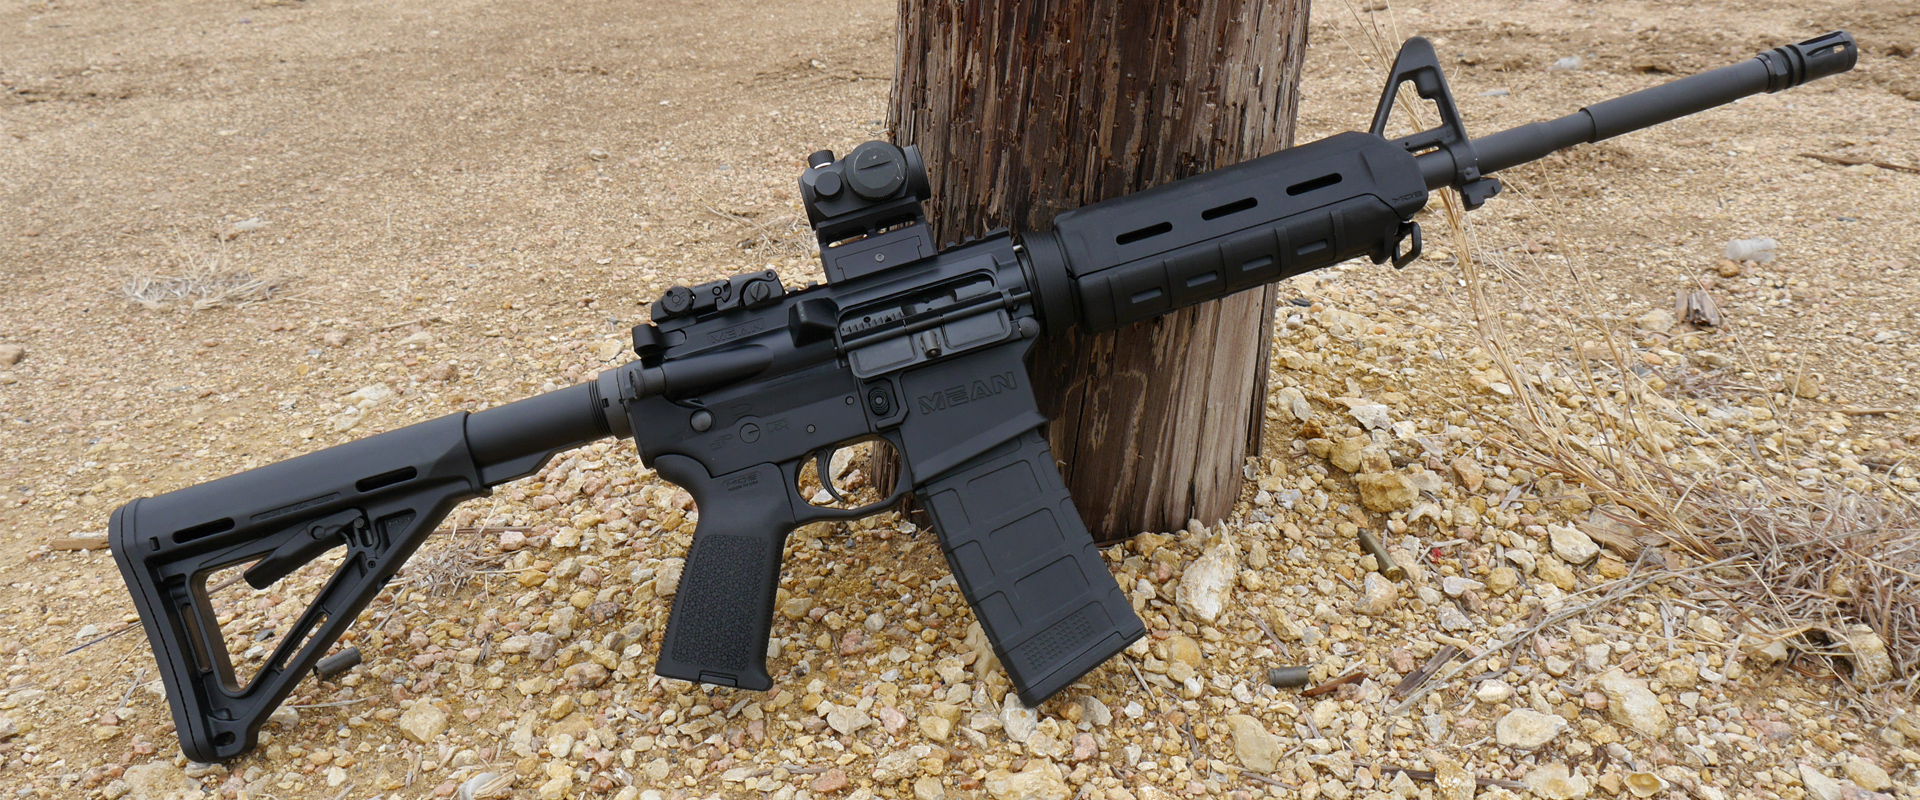 Why The AR-15? | Texas Public Radio